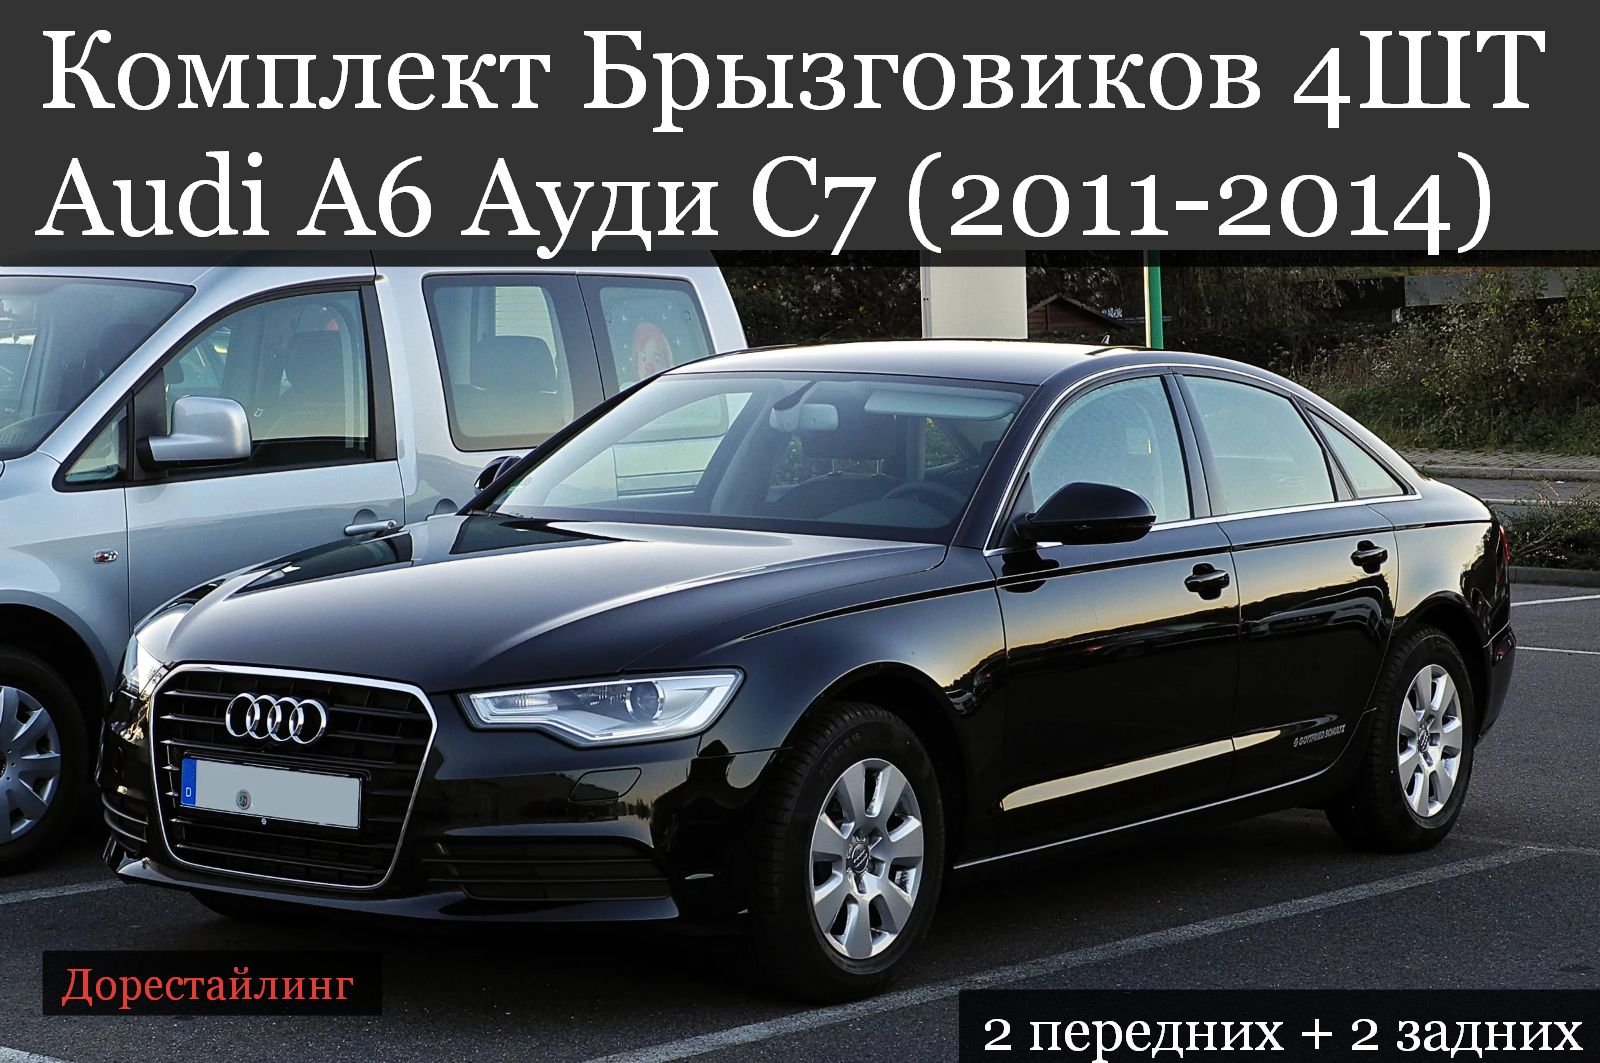 A6 c7 купить. Audi a6 2011. Ауди а6 2011. Audi a6 c7. Audi a6 c6 2011.